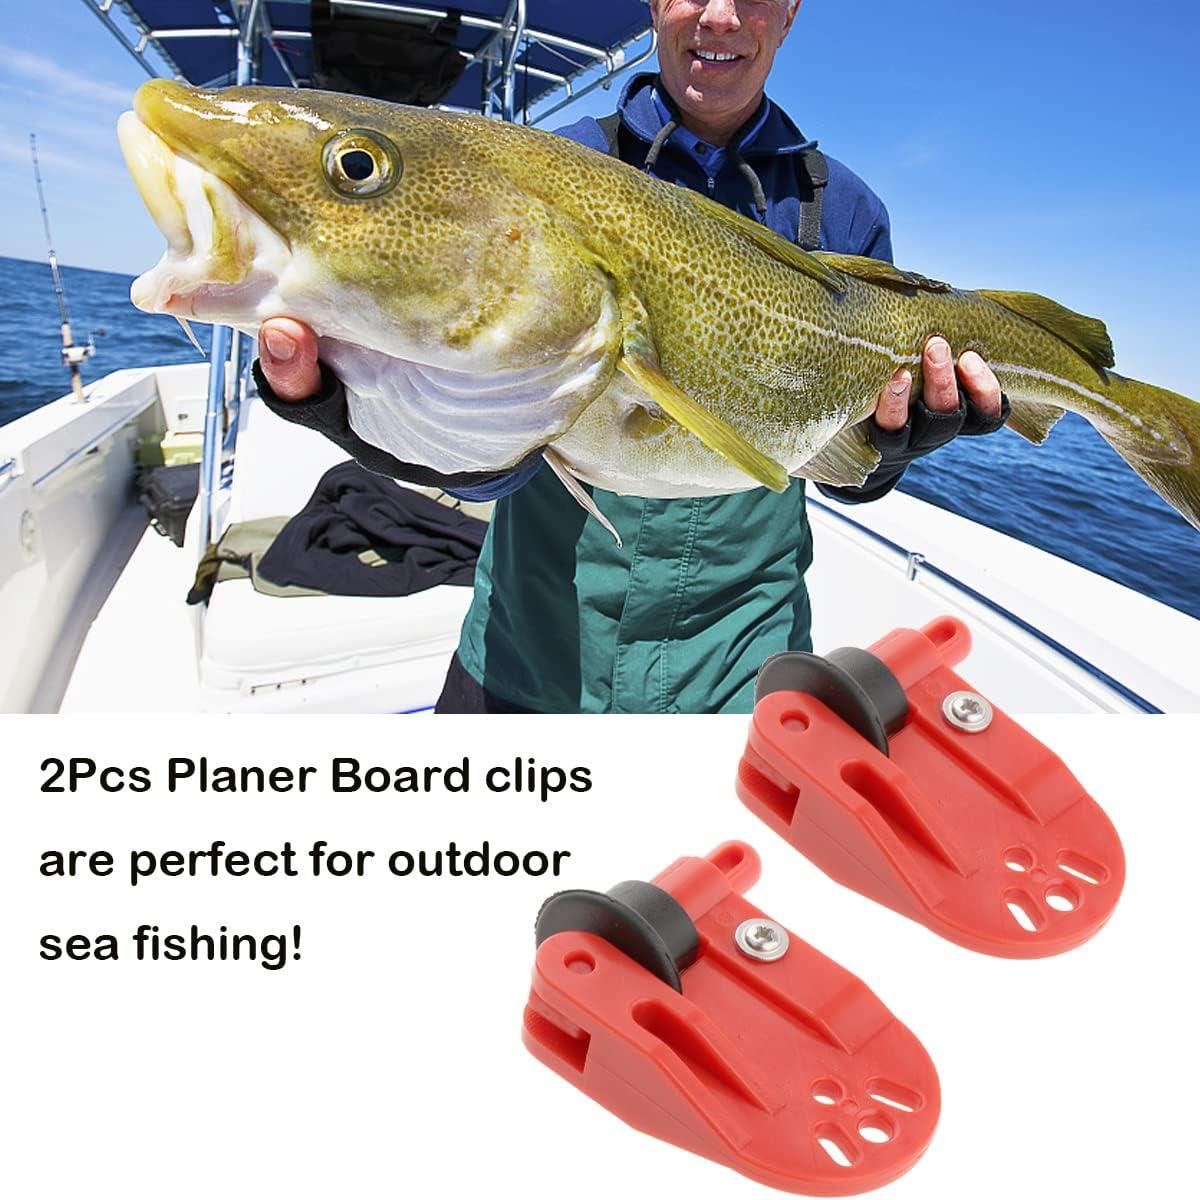 2 Pieces Planer Board Zams pro Release Clips Fishing In-line Side